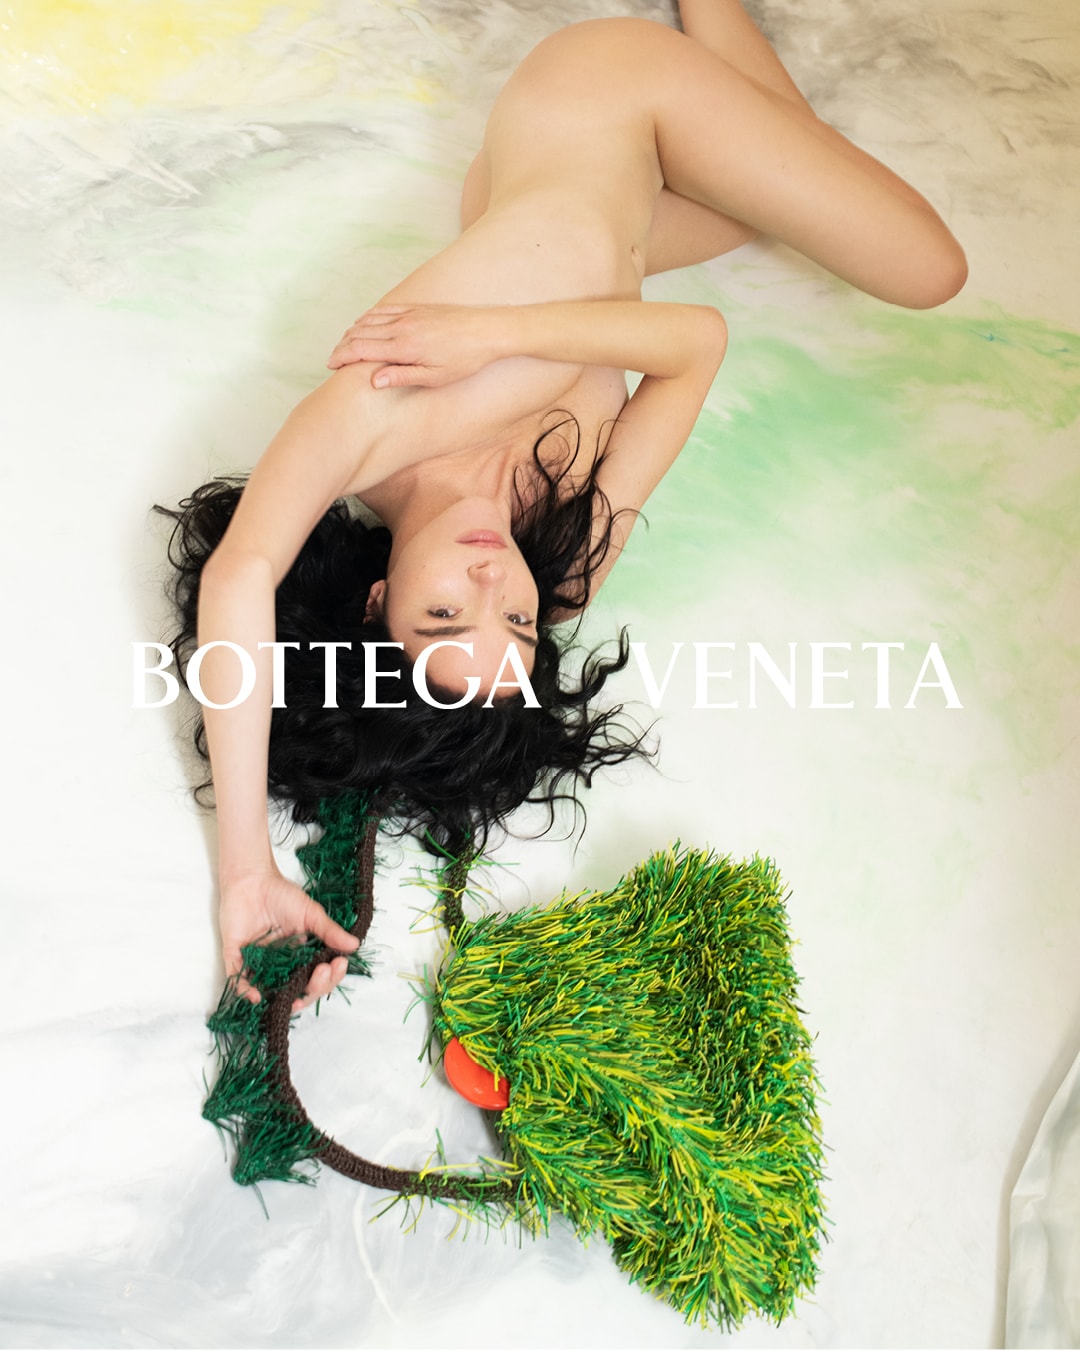 Bottega Veneta 攜手 Gaetano Pesce 展出「Vieni a Vedere」最新裝置藝術